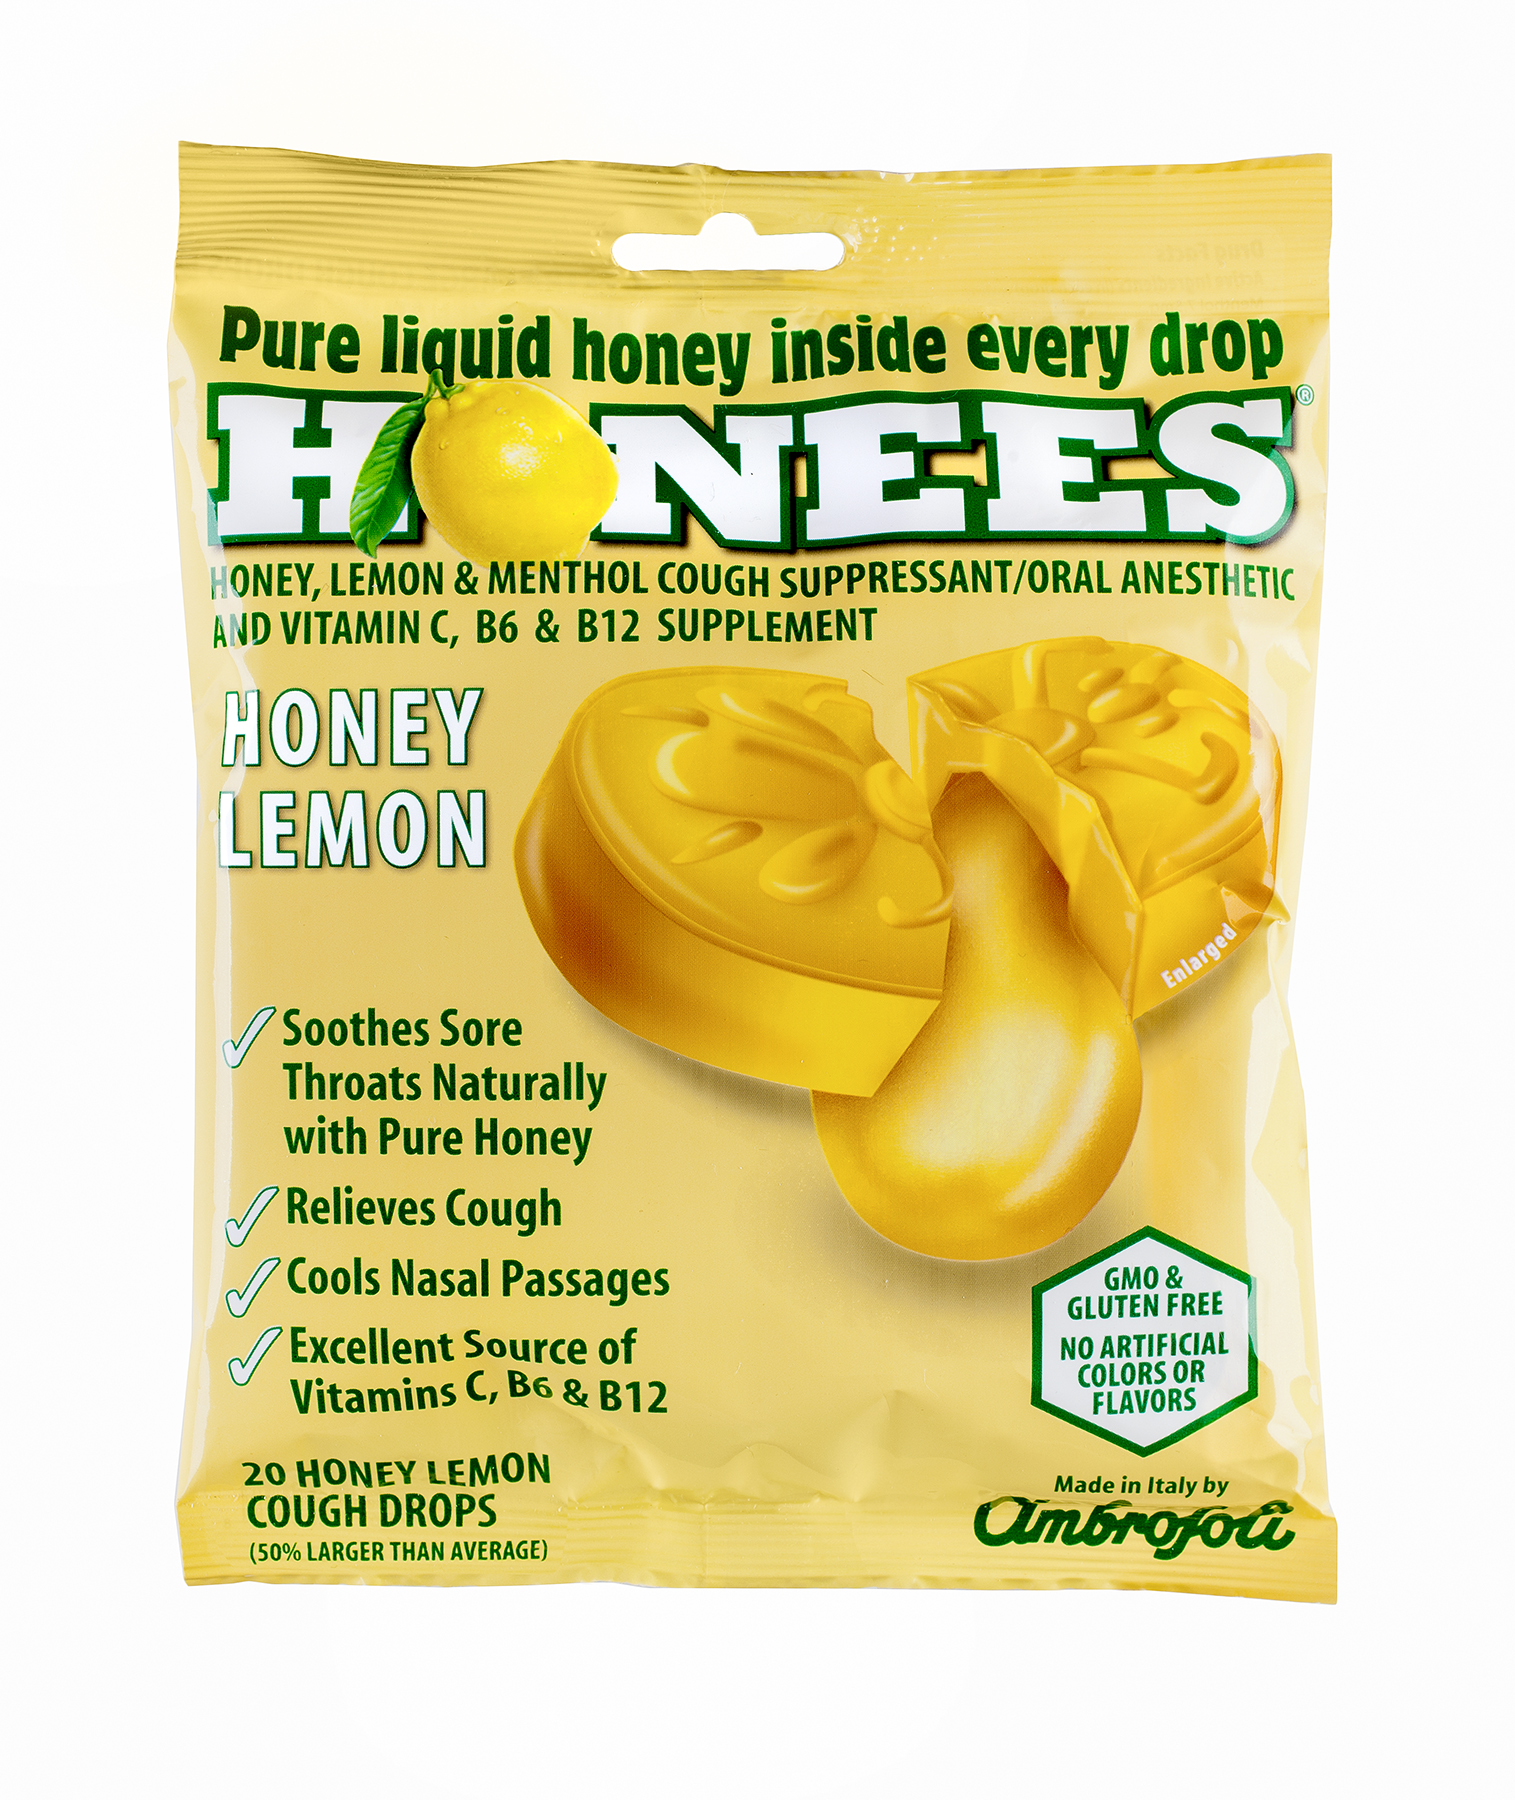 Honees Honey & Lemon Cough Drops - Pure liquid honey inside every drop by Andre Prost, Inc.